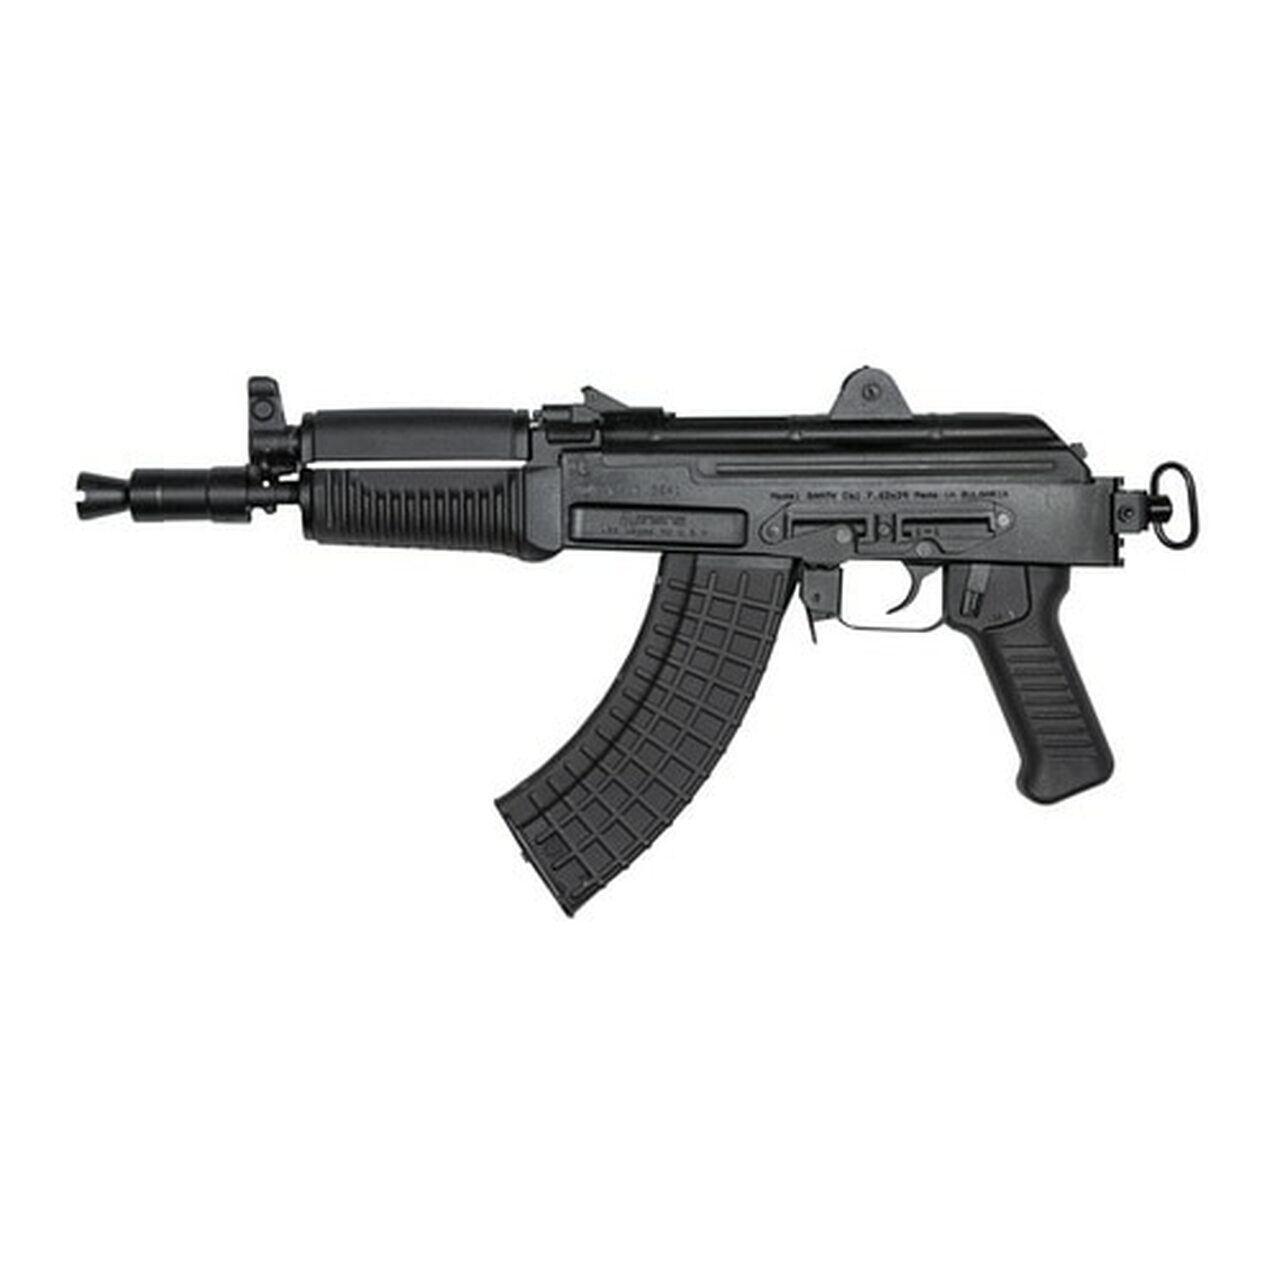 Image of Arsenal SAM7K-04 Pistol, 762X39, 10.5", Steel, Black, Adjustable Sights, Picatinny Rail for Rear Attachments